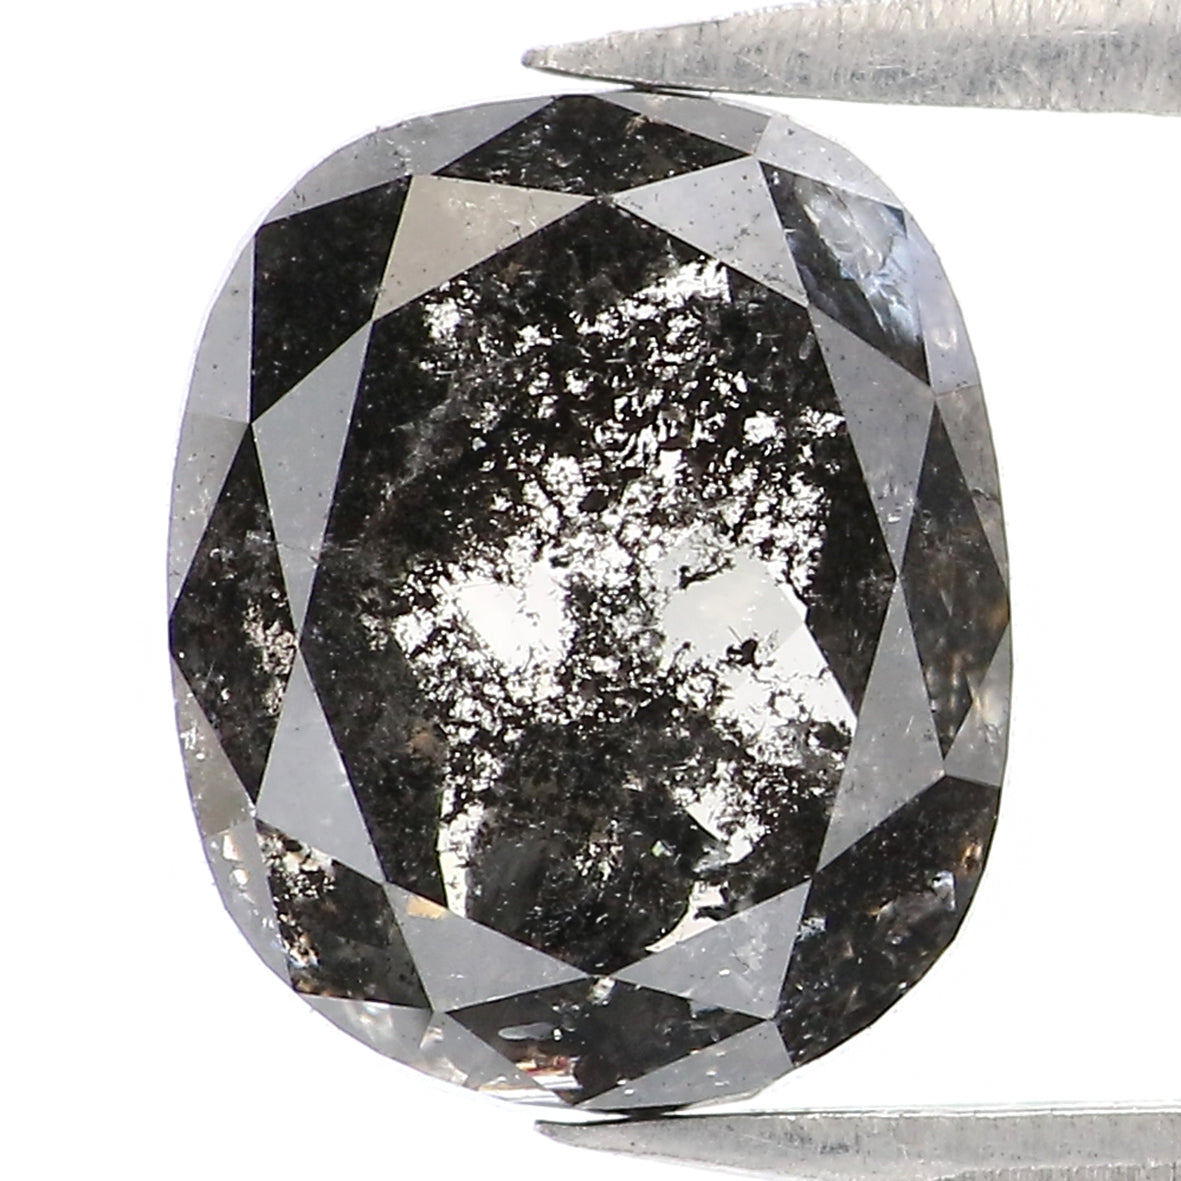 Natural Loose Oval Salt And Pepper Diamond Black Grey Color 2.22 CT 8.74 MM Oval Shape Rose Cut Diamond KDL2070